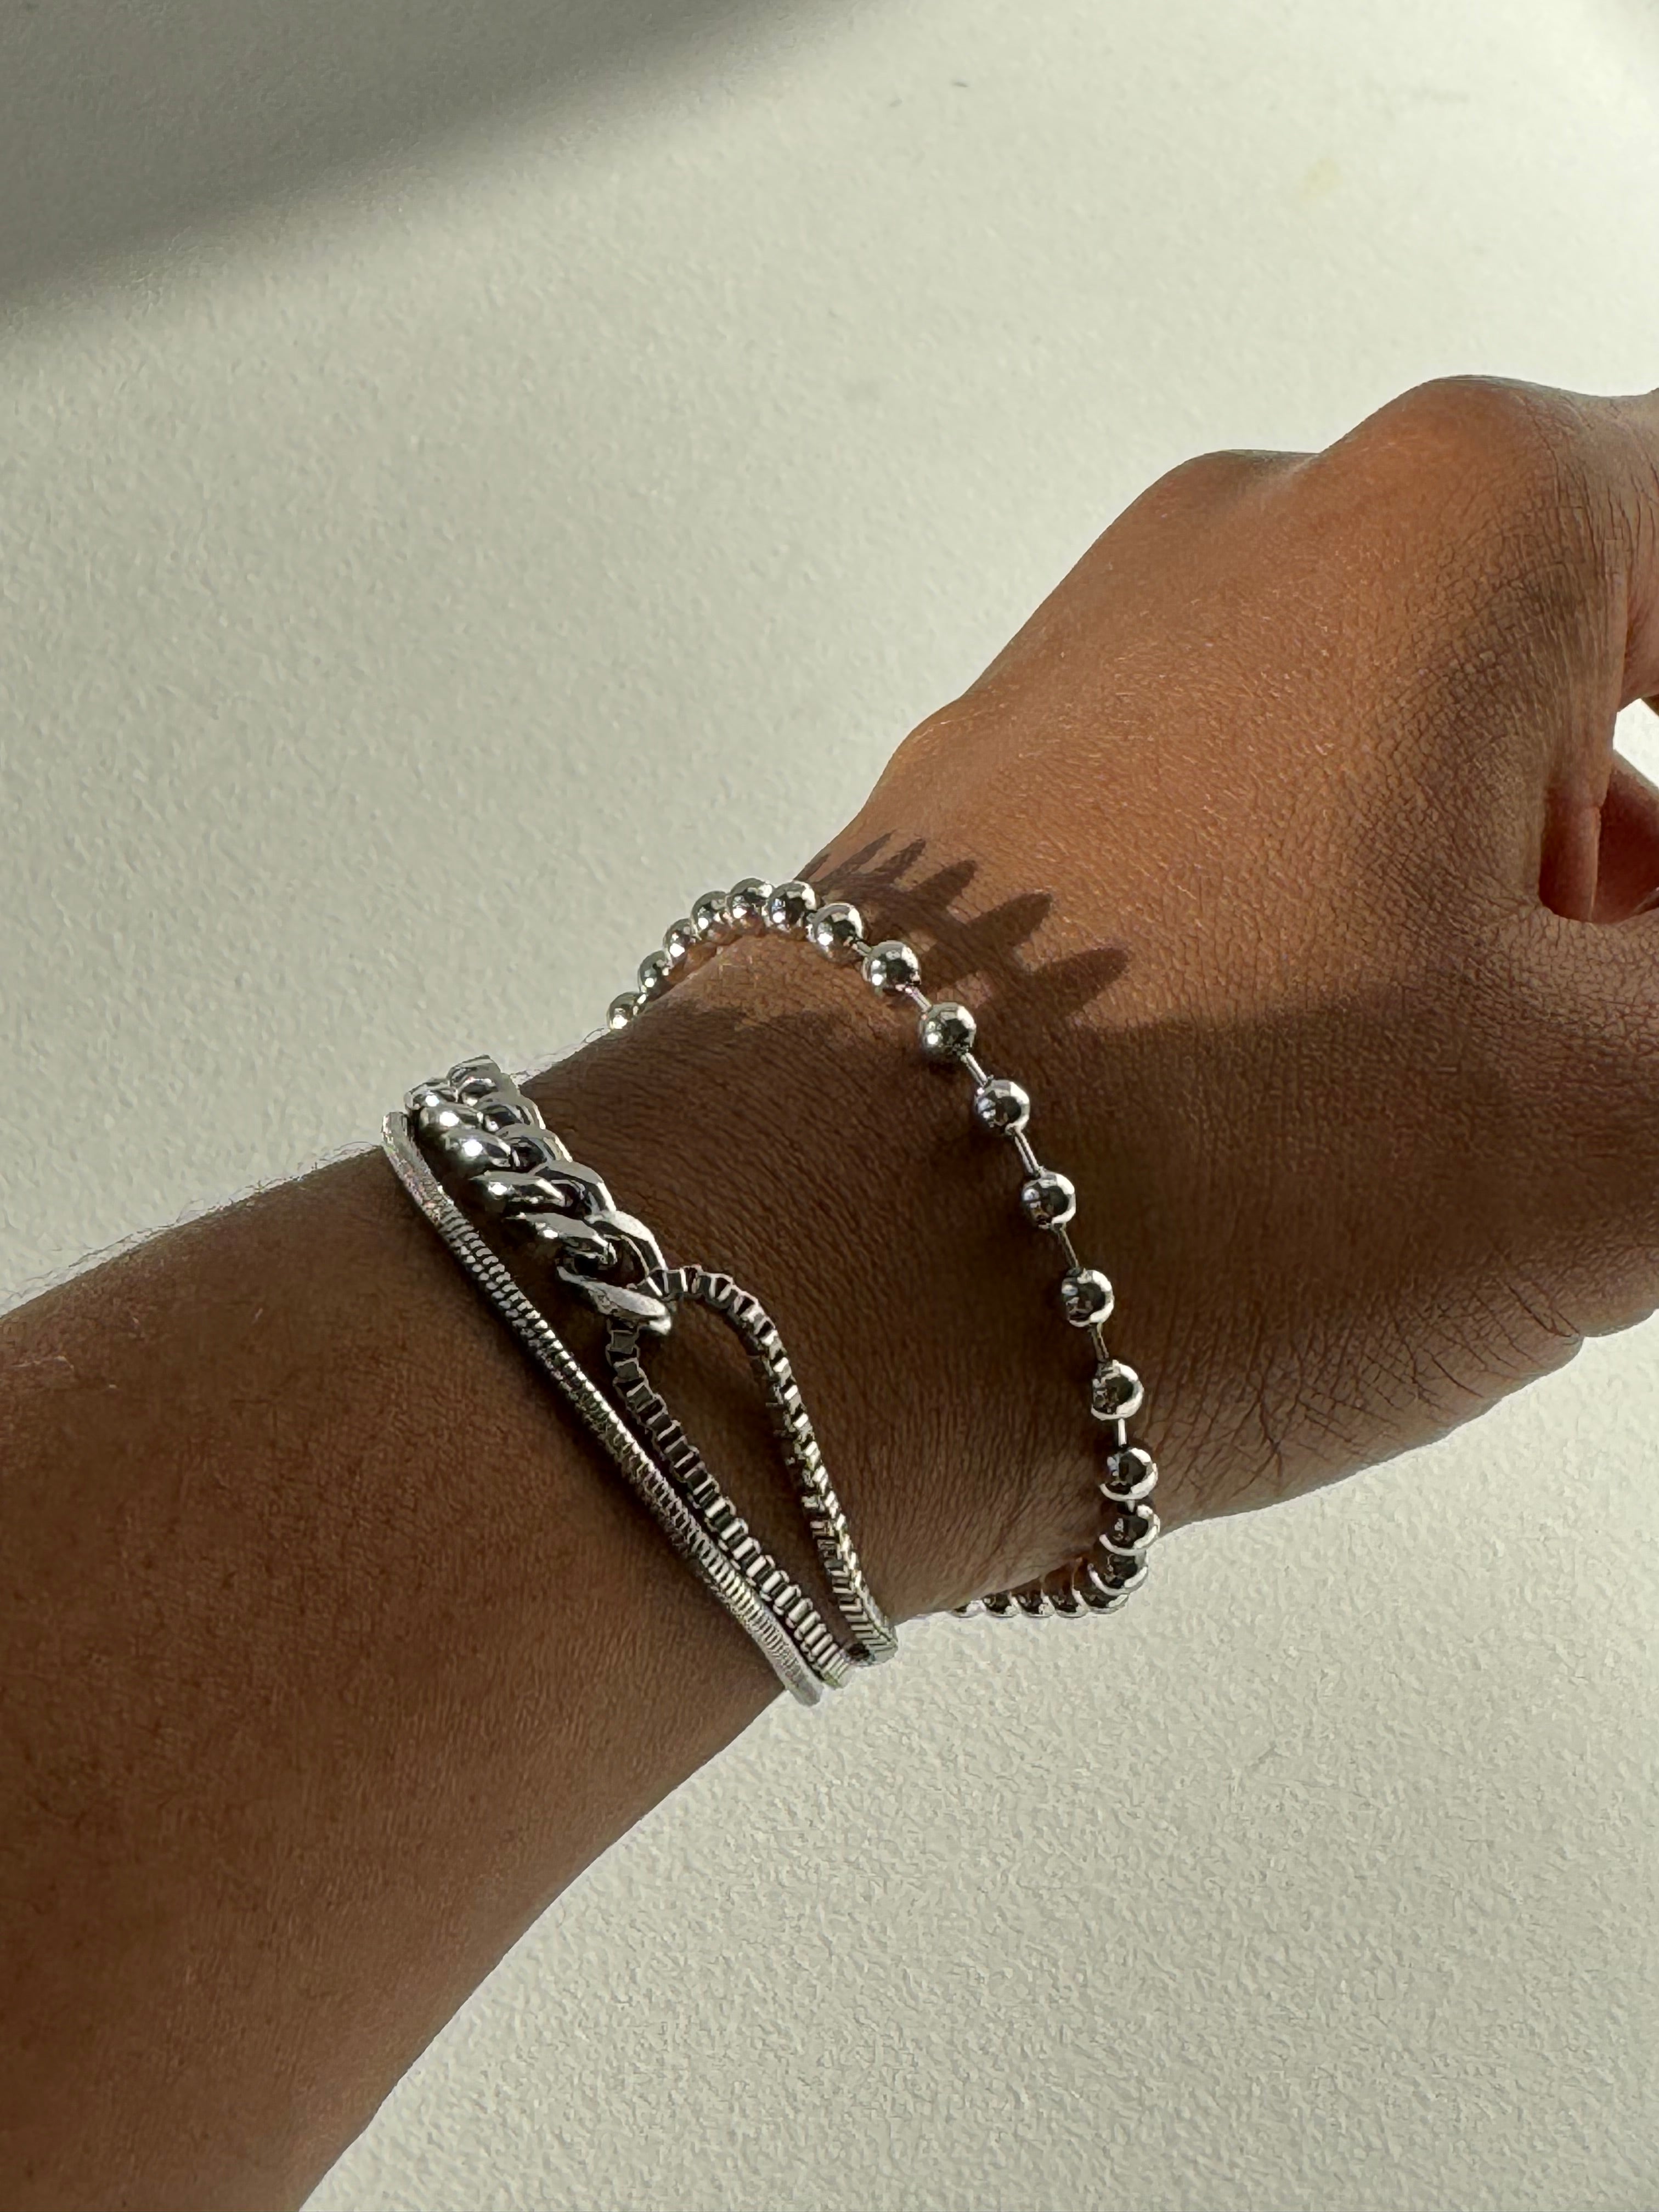 92.5% Casual Wear Pure Silver Bracelet, 20 Gram at Rs 170/gram in Jaipur |  ID: 23009453430